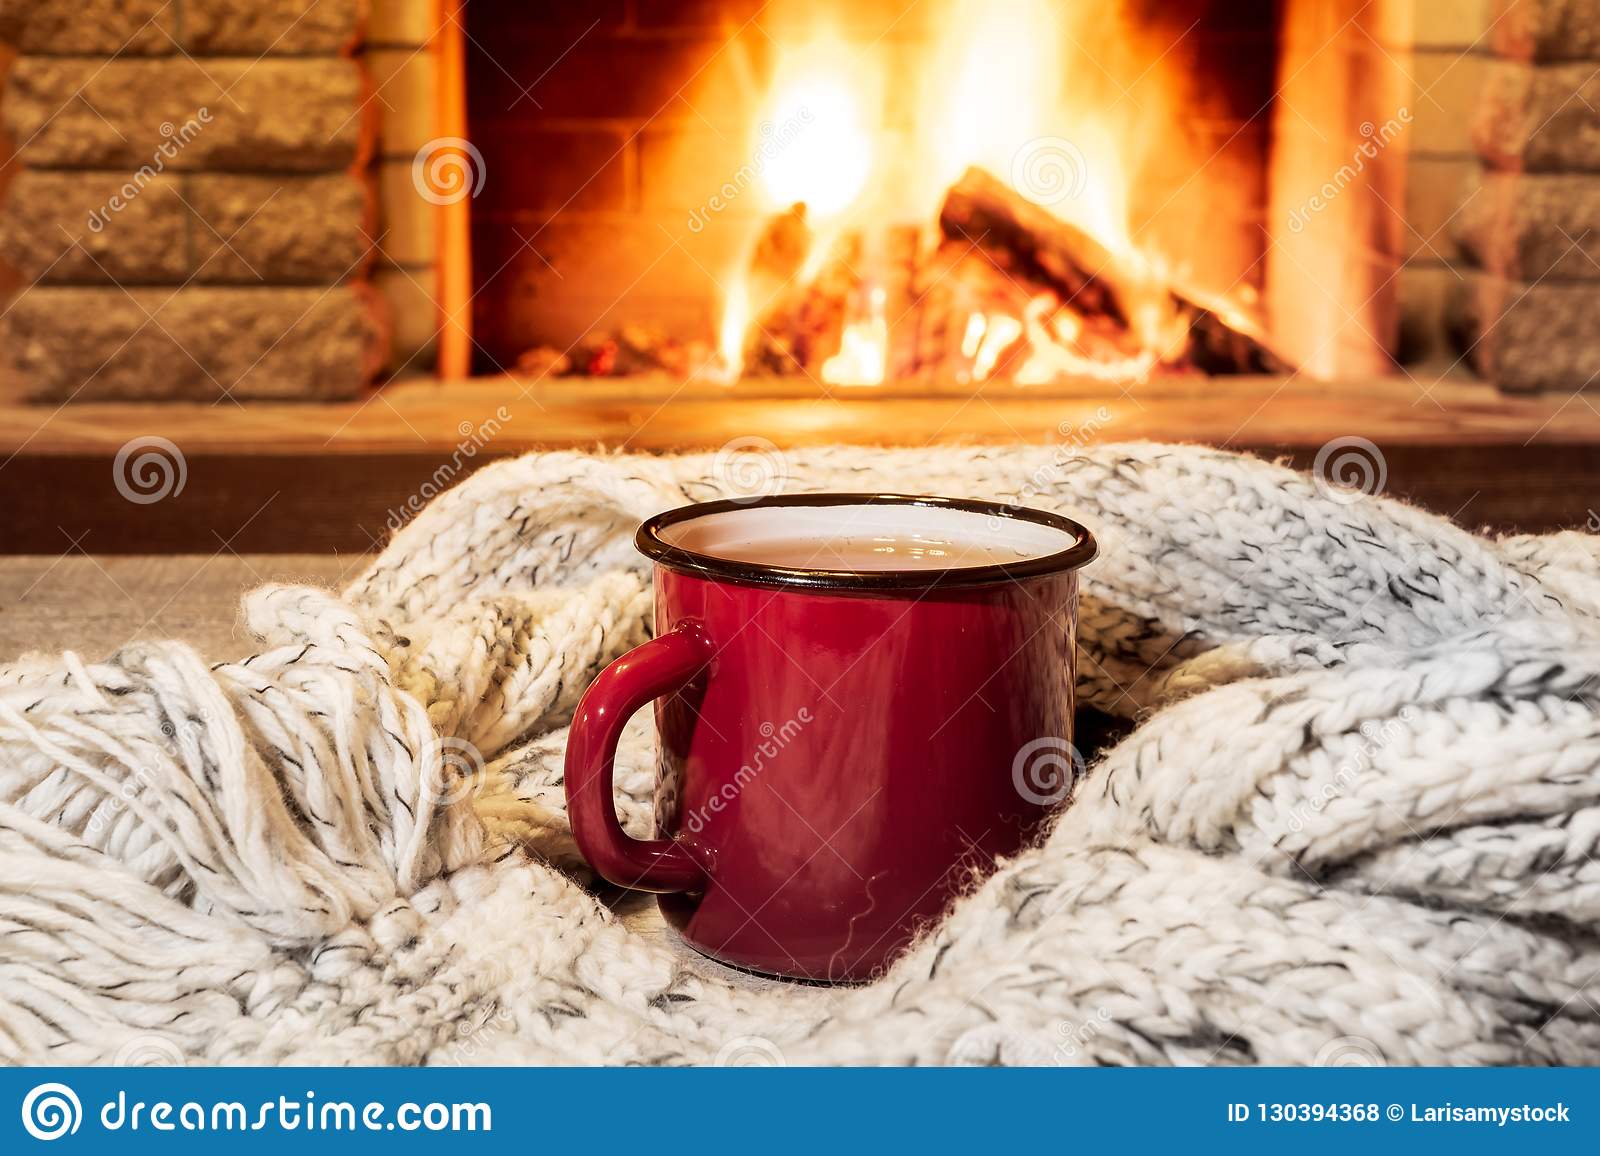 cozy-scene-near-fireplace-red-enameled-mug-hot-tea-warm-scarf-country-house-winter-vacation-ho...jpg